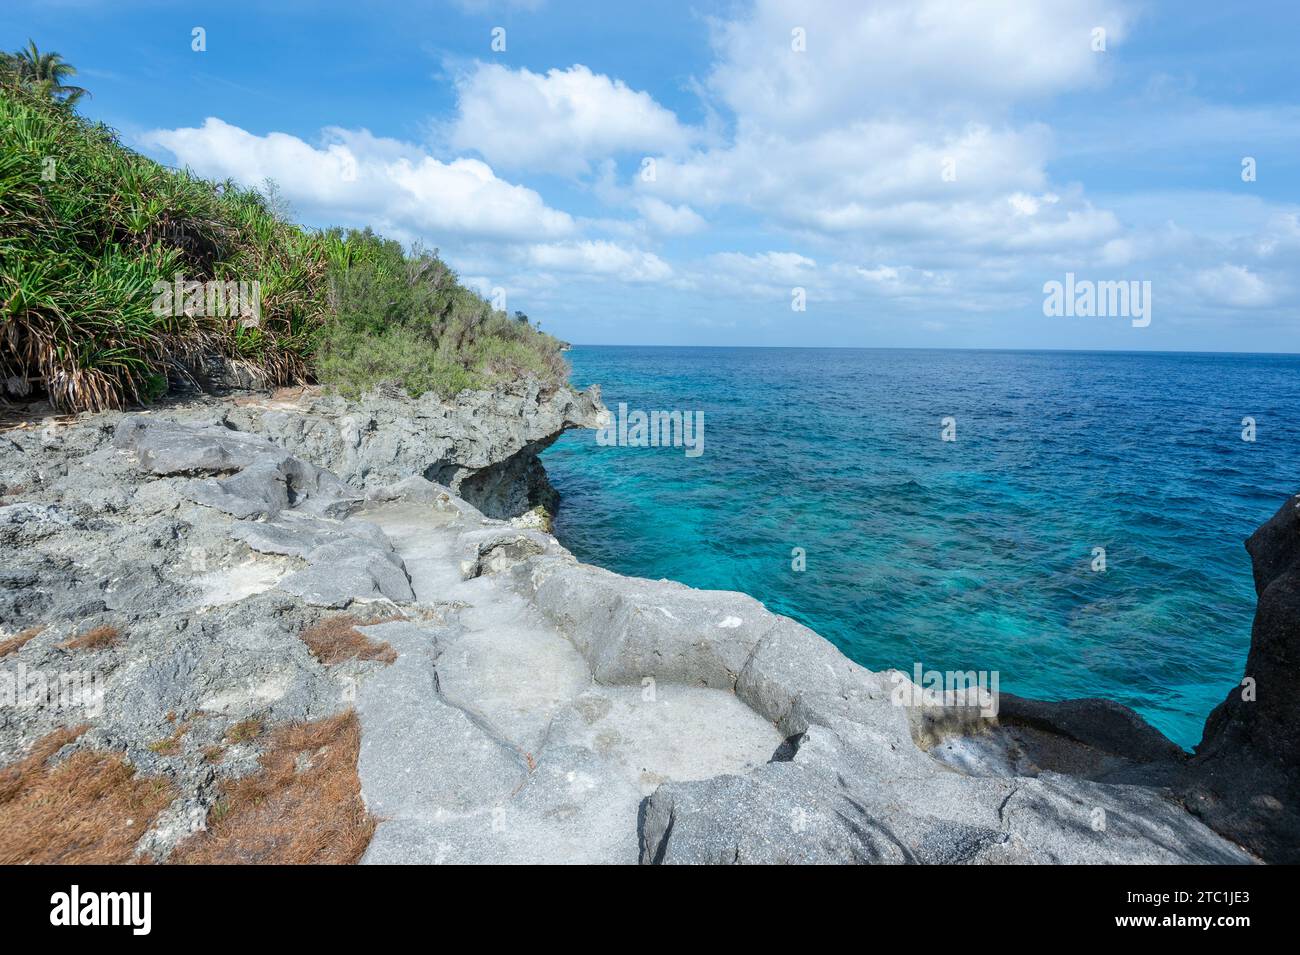 Scenic view of the rugged coastline of Christmas Island, Australia Stock Photo